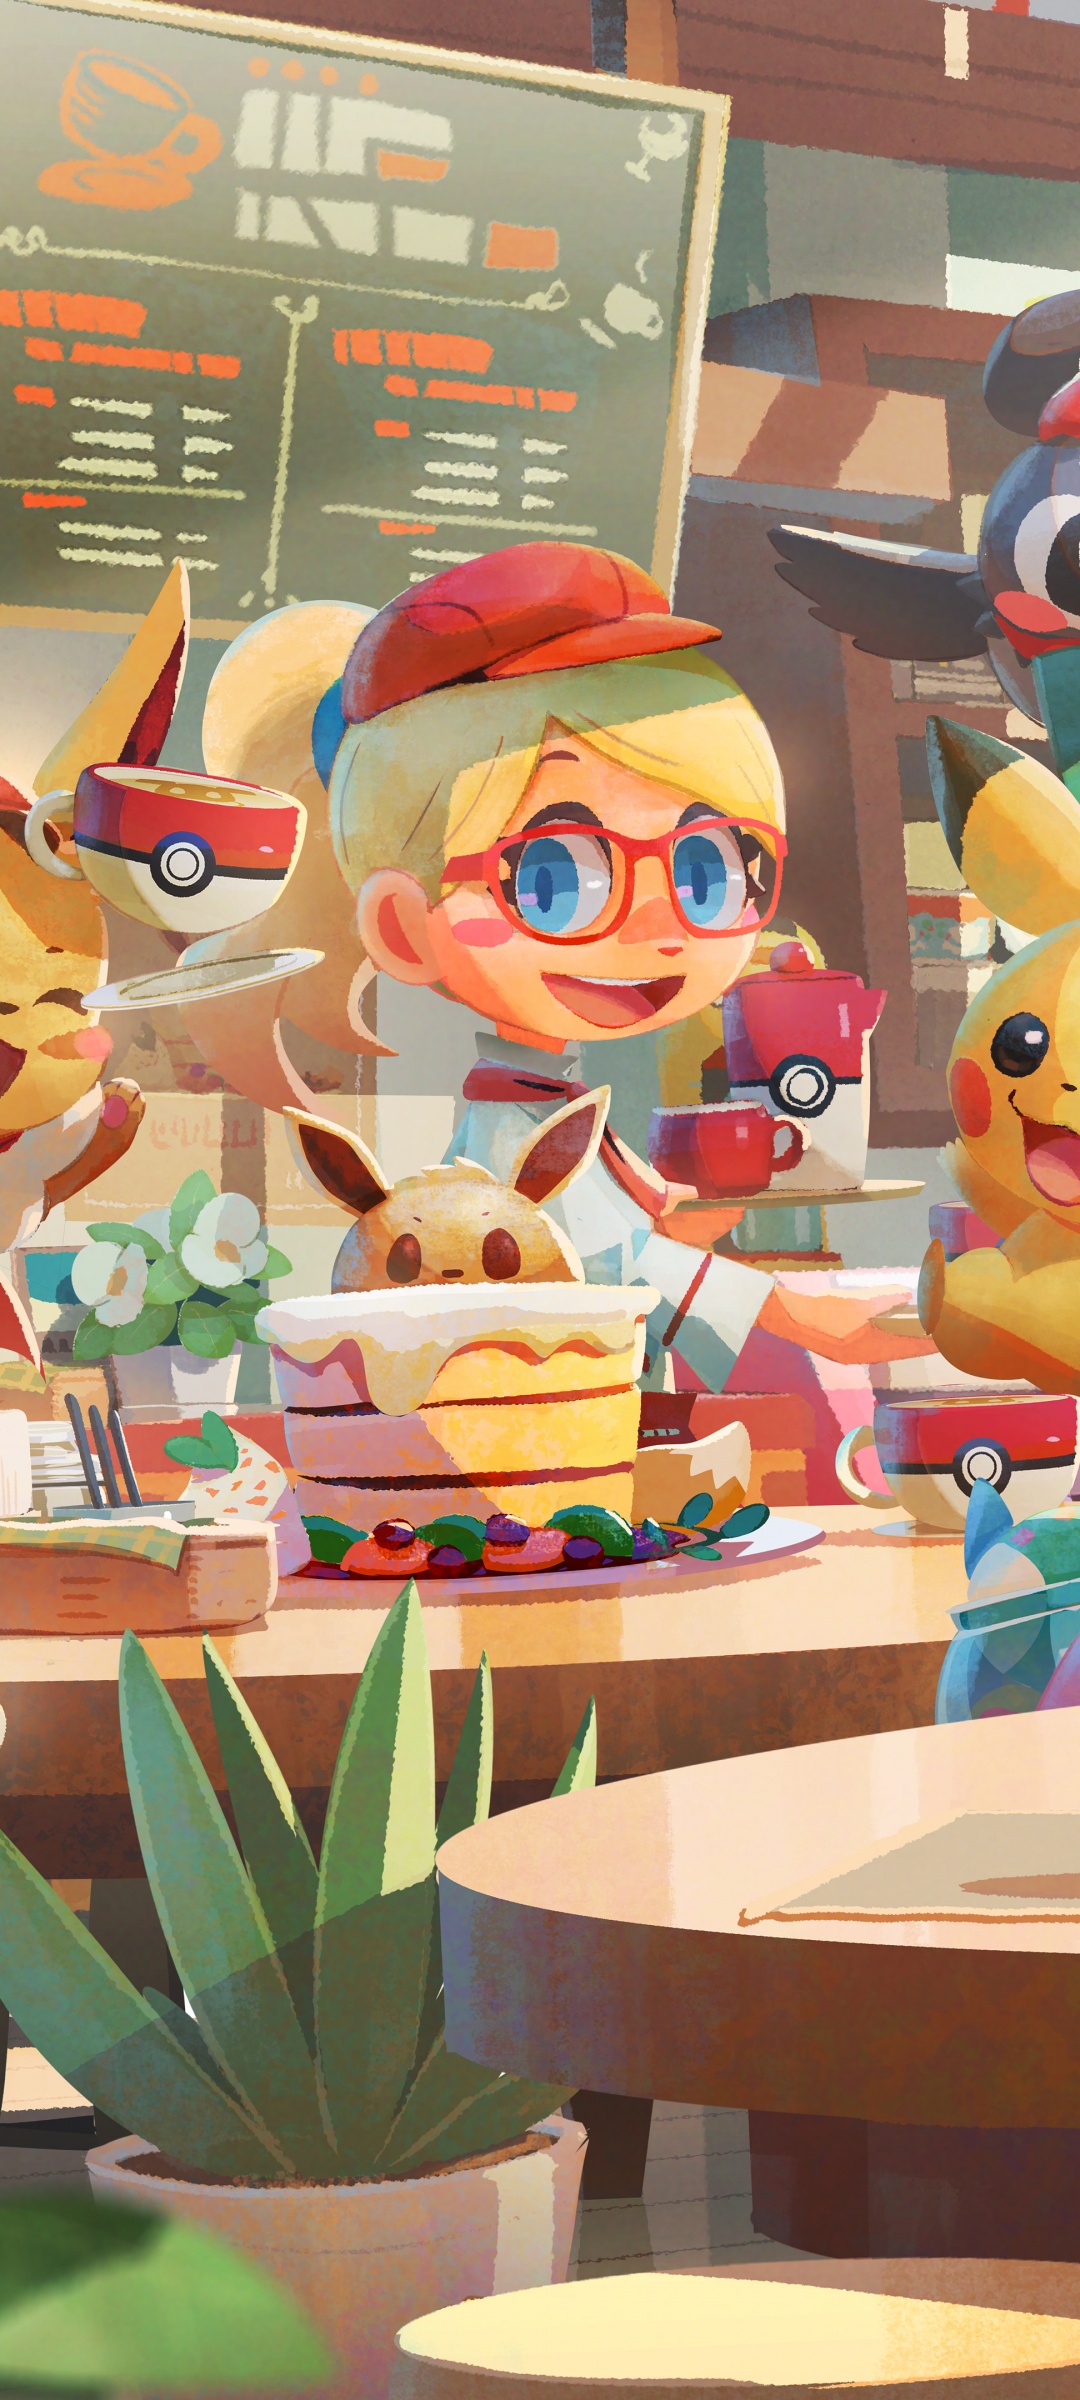 Pokémon Café Mix Wallpaper 4K, 2020 Games, Android games, 5K, 8K, Games